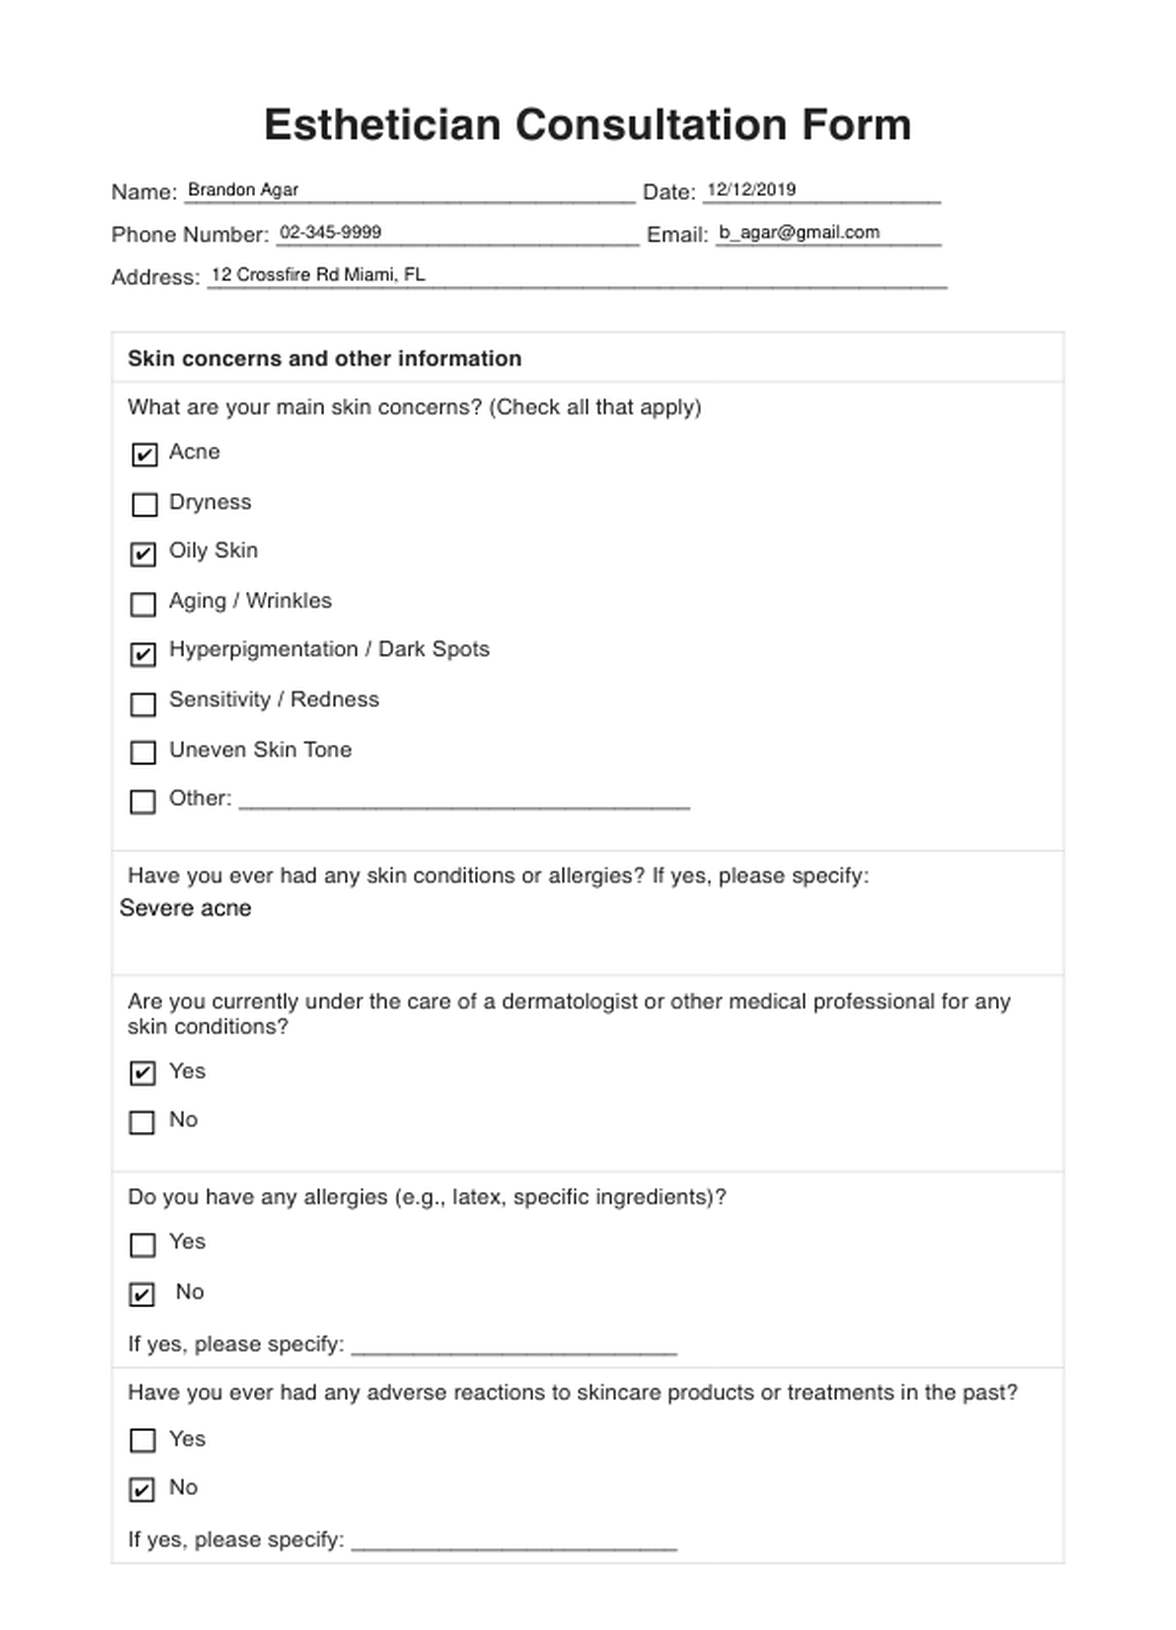 Esthetician Consultation Form PDF Example